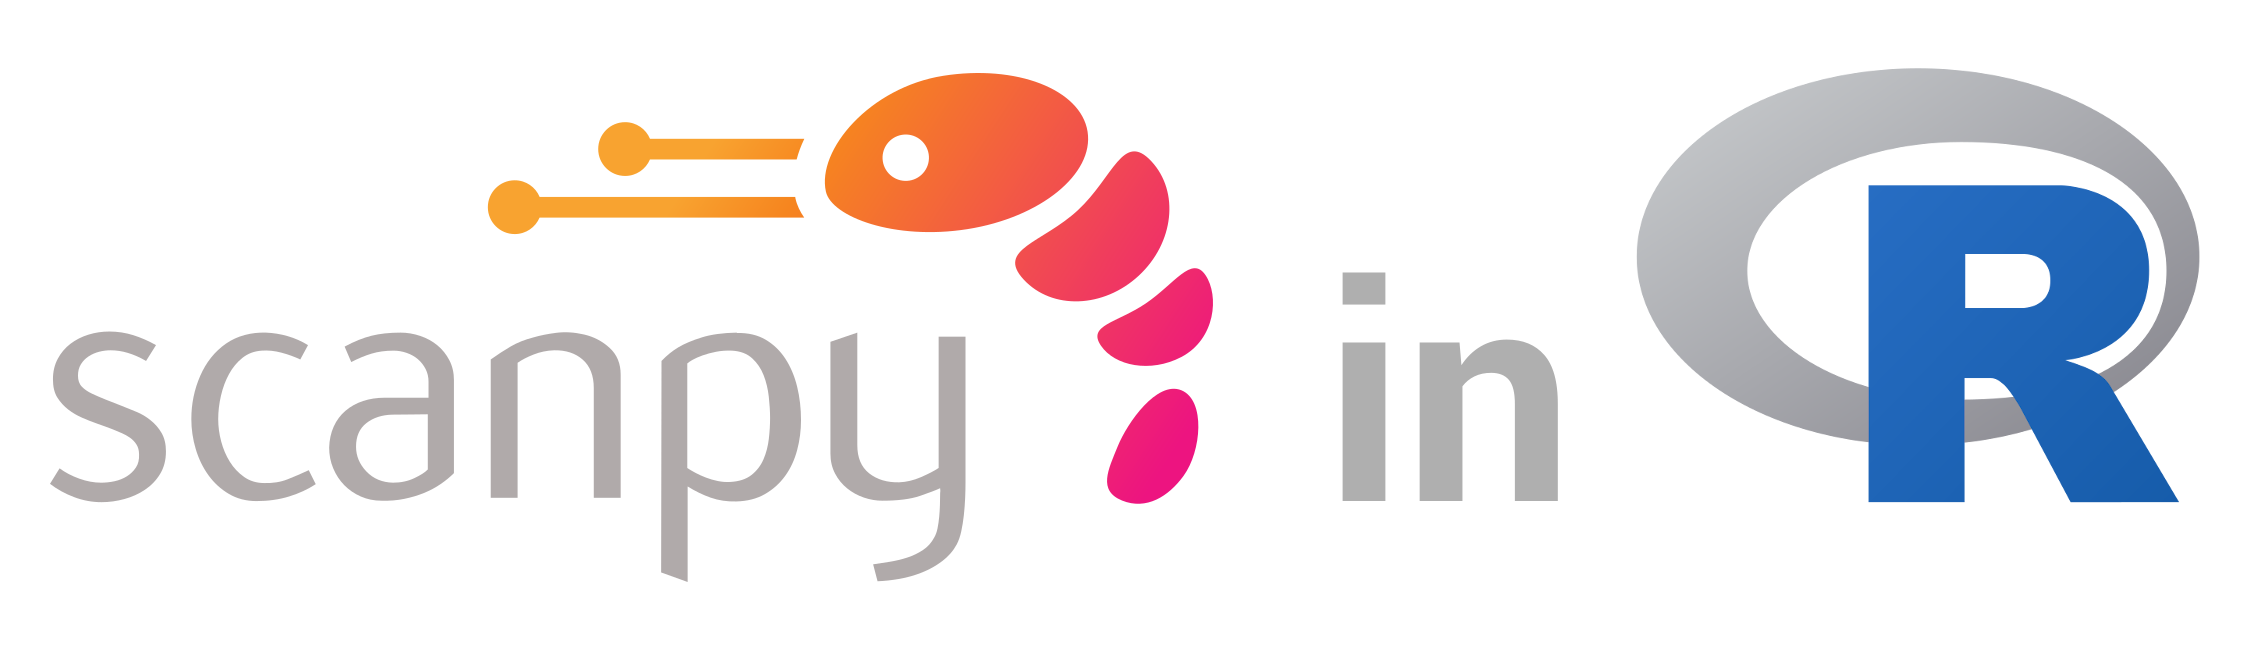 Scanpy in R logo